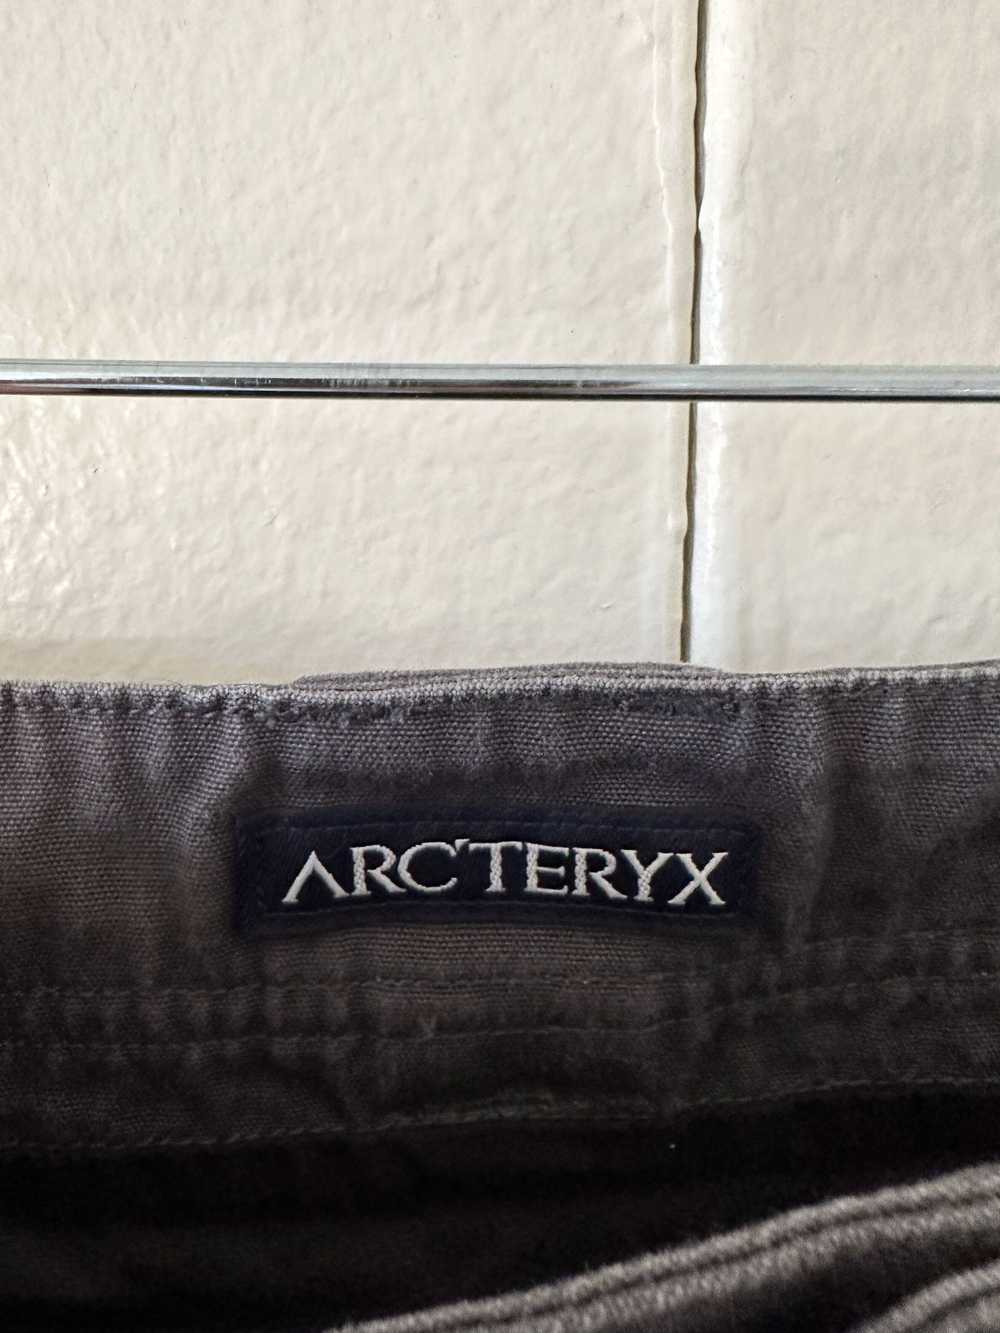 Arc'Teryx Arc'Teryx Cargo Pants - image 3